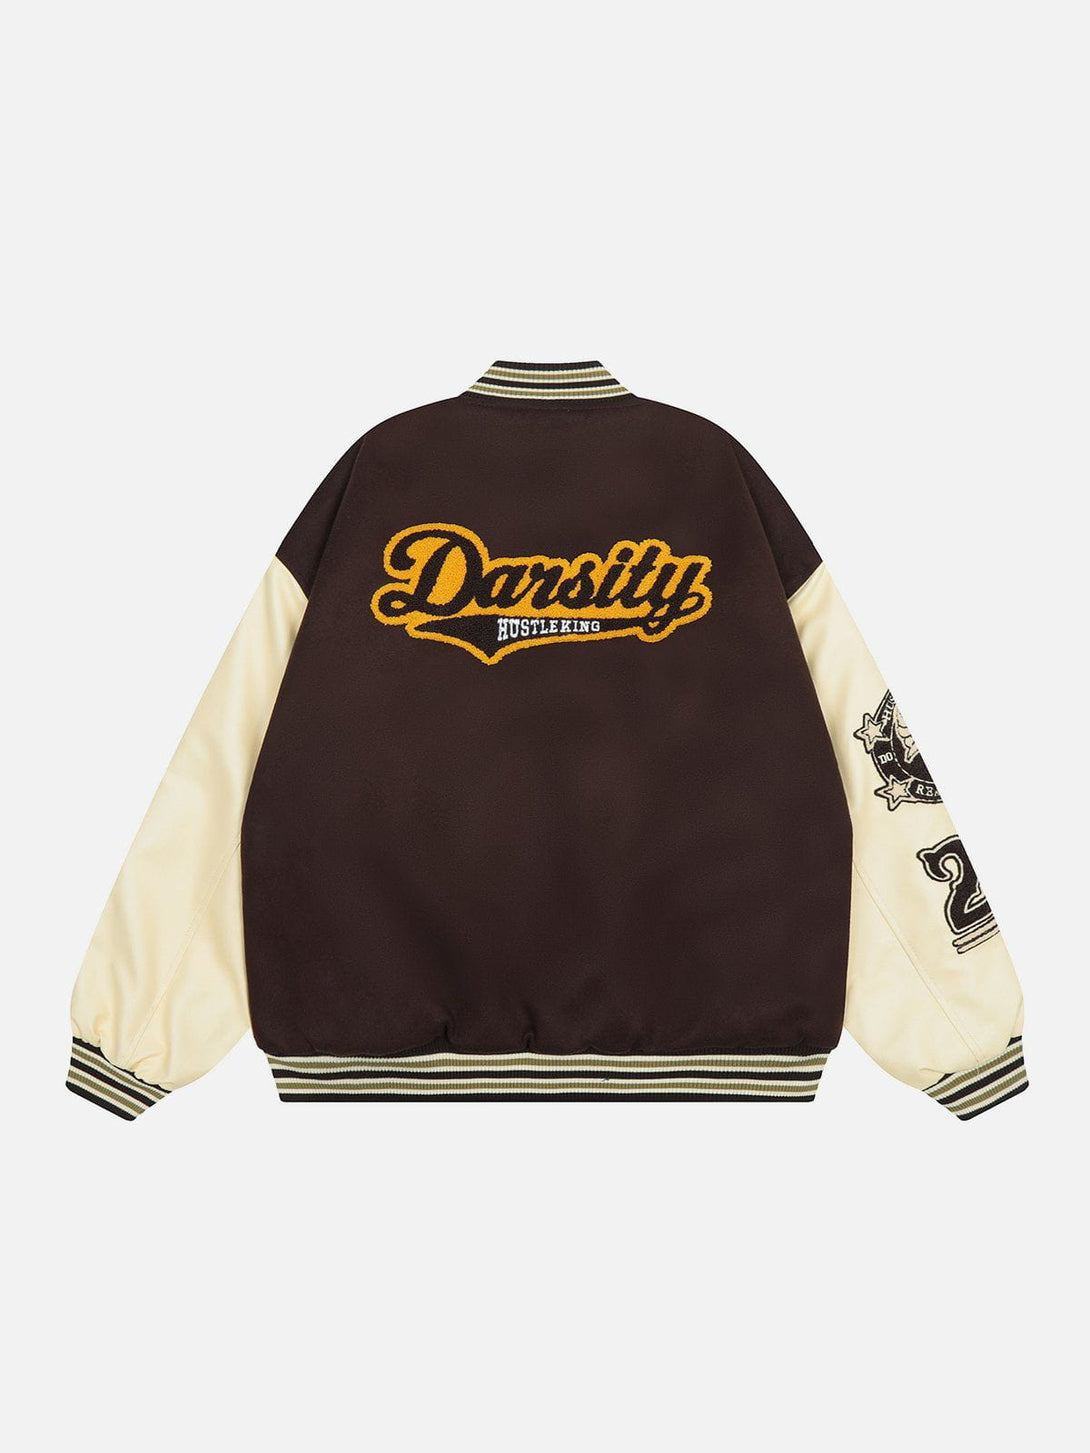 Levefly - Letter Embroidery Varsity Jacket - Streetwear Fashion - levefly.com